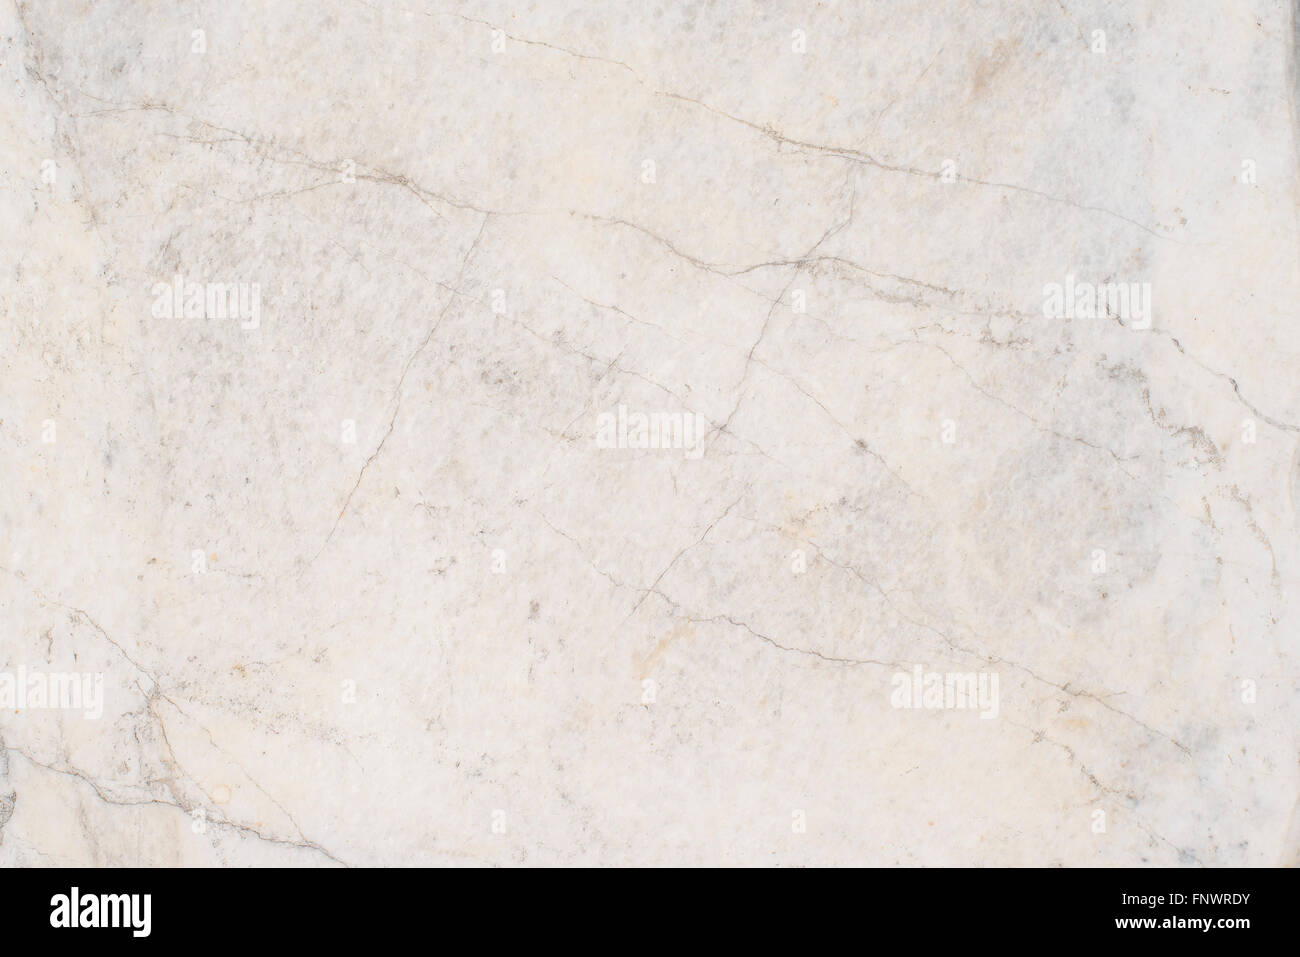 White marble texture background Stock Photo - Alamy